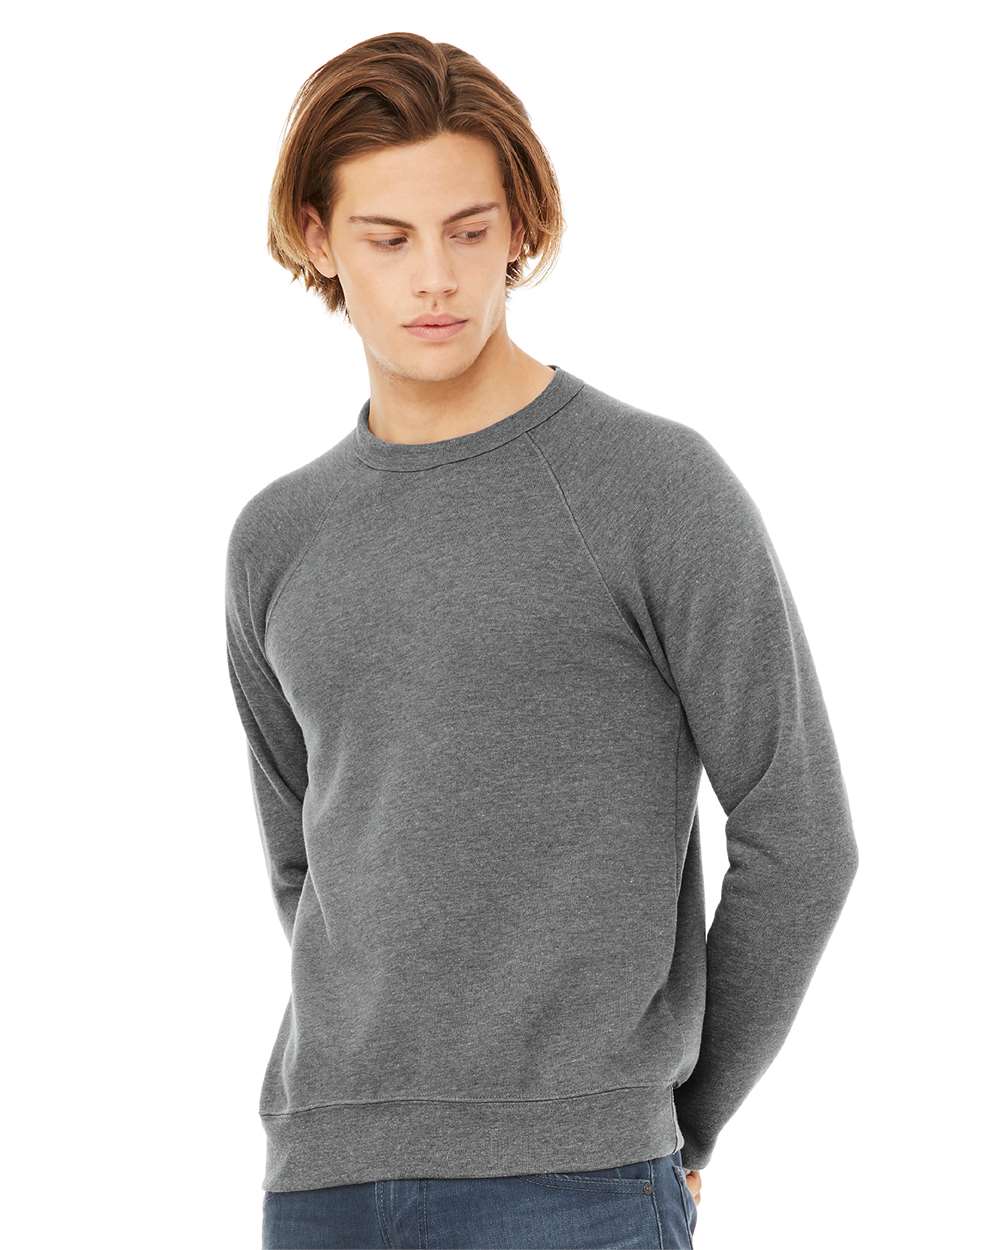 Bella + Canvas Fleece Crewneck Sweatshirt Size XLarge